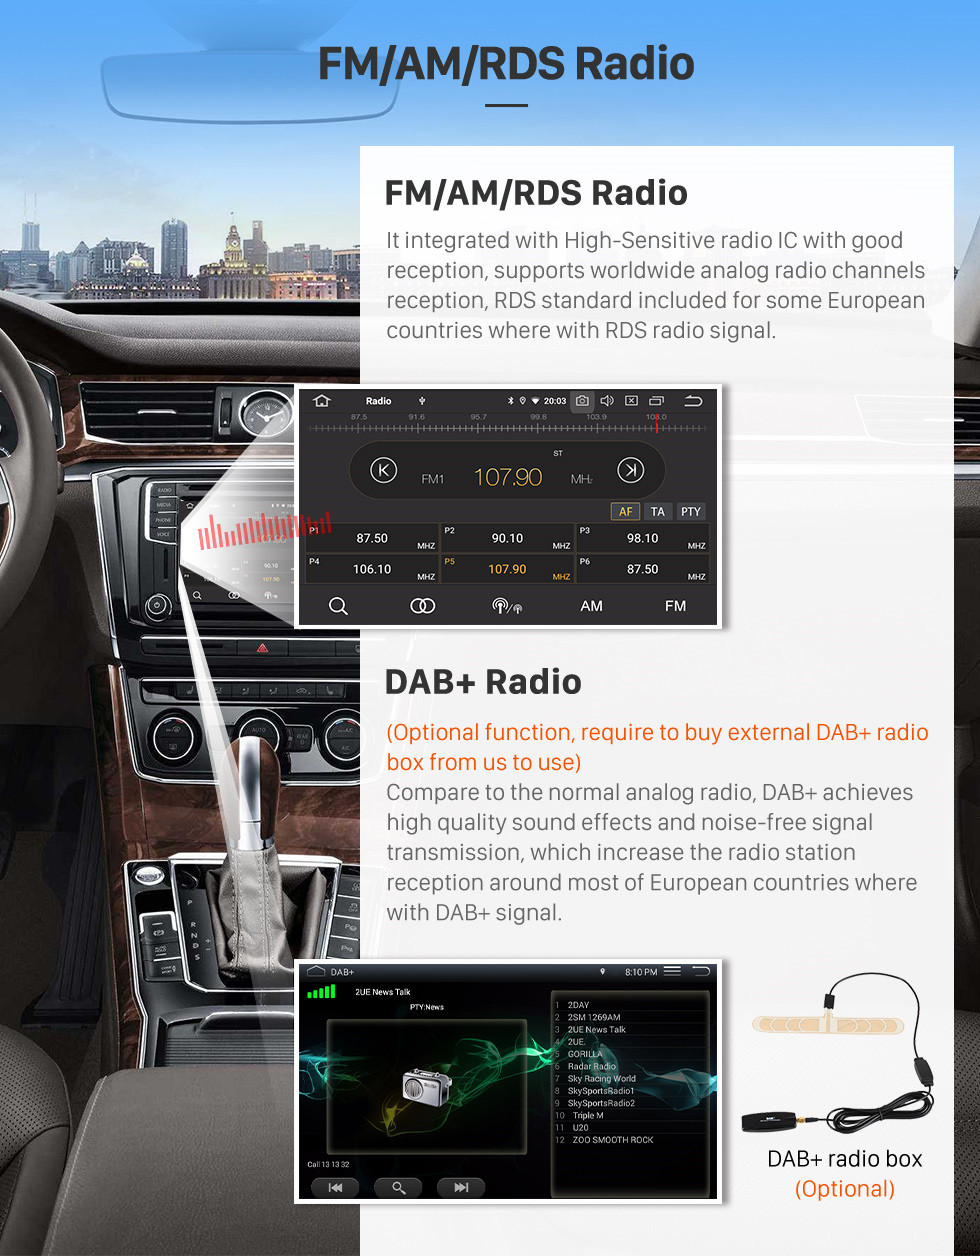 Seicane Für 2006-2012 Hyundai SANTA FE OEM Android 10.0 HD 1024 * 600 Touchscreen GPS-Navigationssystem Radio Bluetooth OBD2 DVR Rückfahrkamera TV 1080P Video USB WIFI Lenkradsteuerung